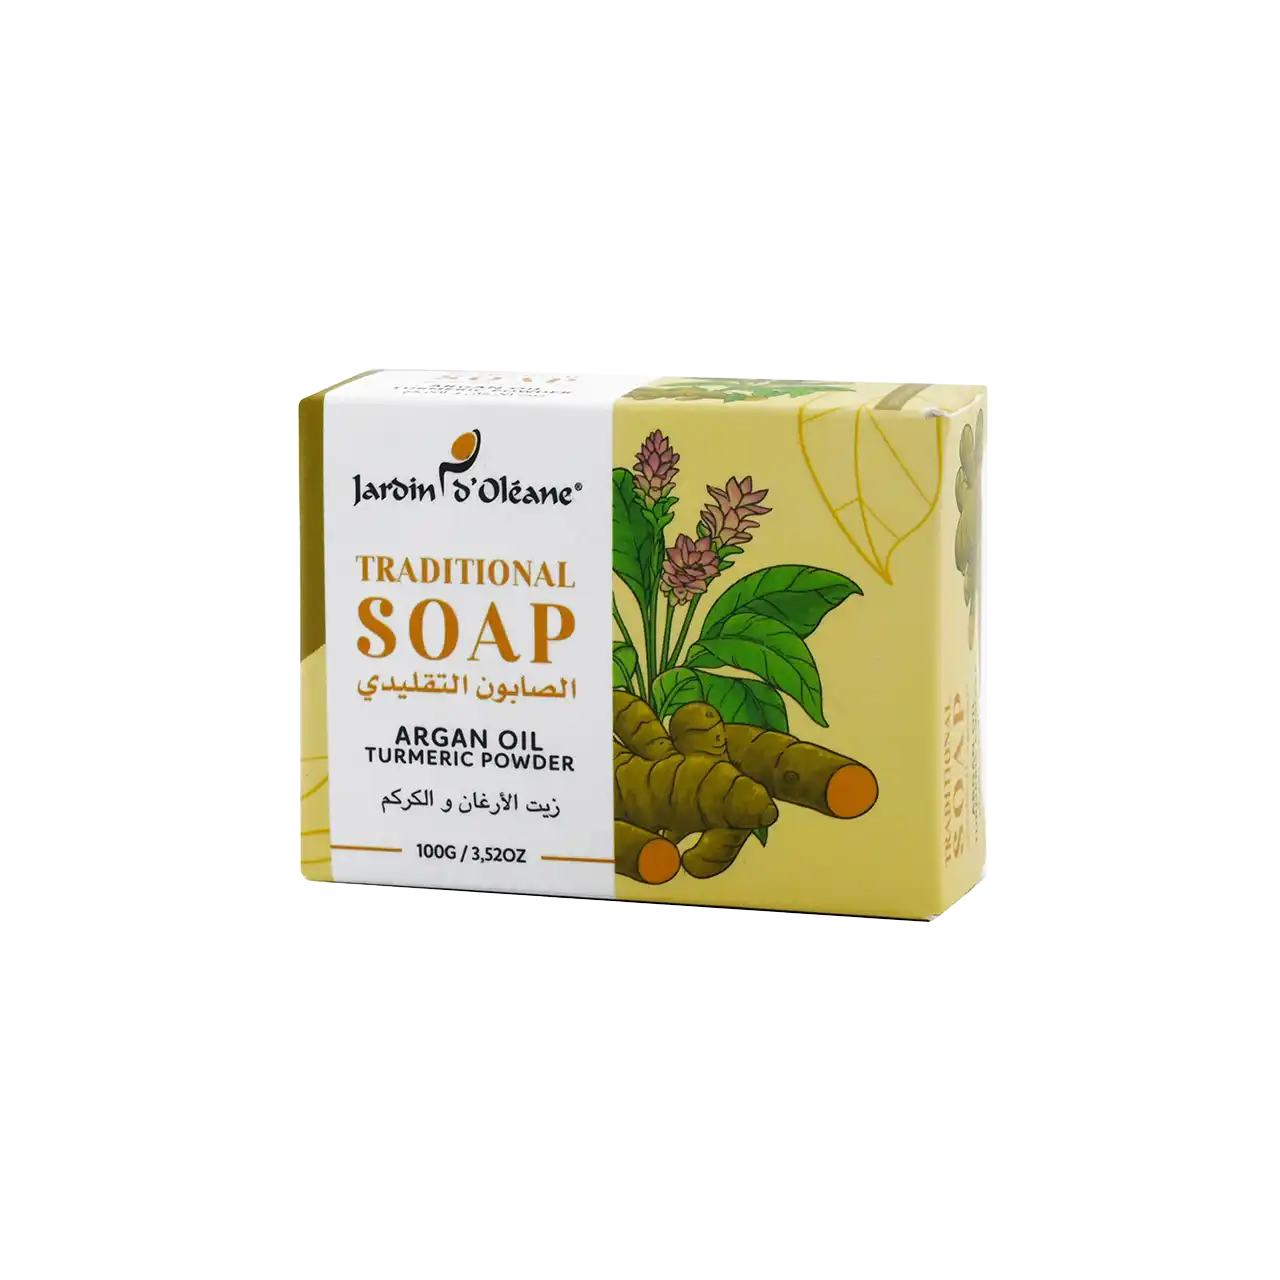 107 -Jardin D’Oleane Traditional Soap with Argan Oil & Turmeric Powder 100g